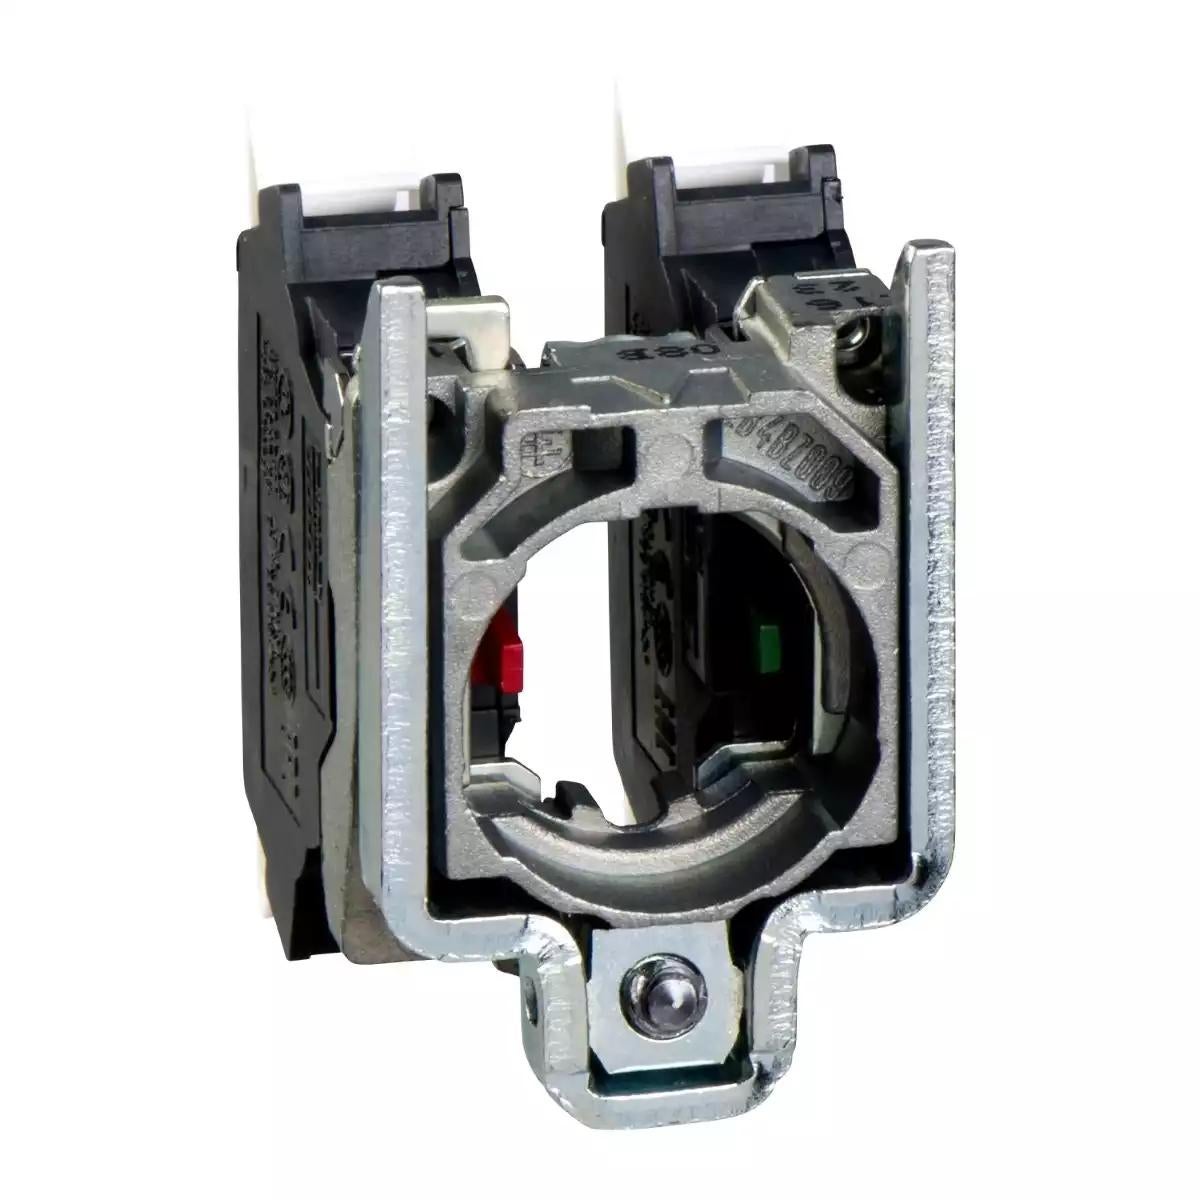 Single contact block with body fixing collar, Harmony XB4, metal, spring clamp terminal, 1NO+1NC